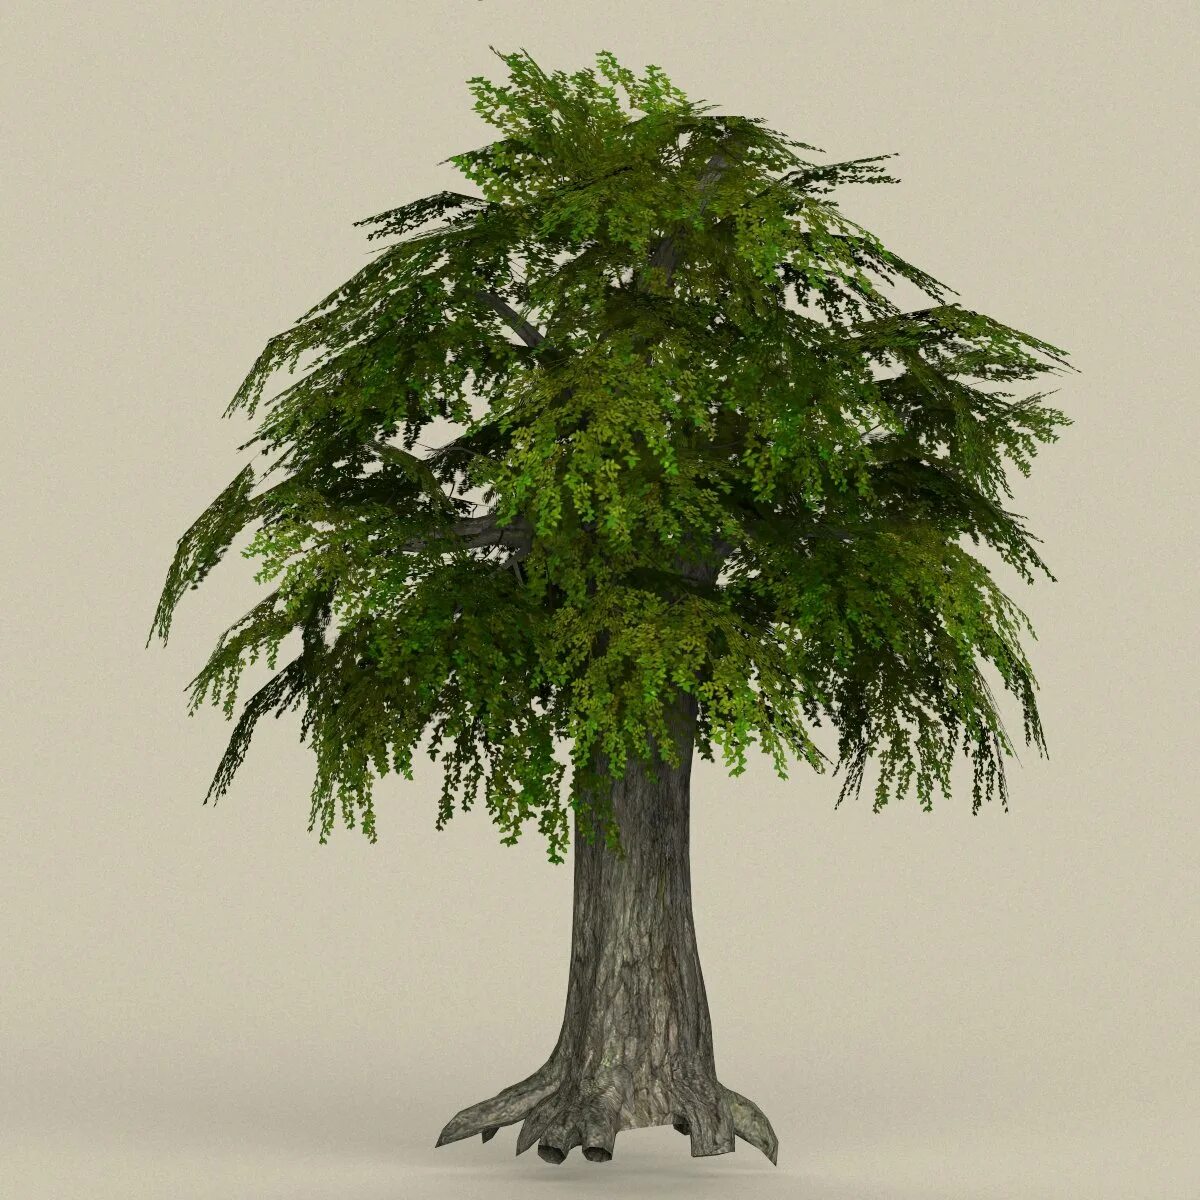 Tree 3ds Max. Модель дерева. 3d модель дерева. Дерево STL модель. Дерево в 3 d